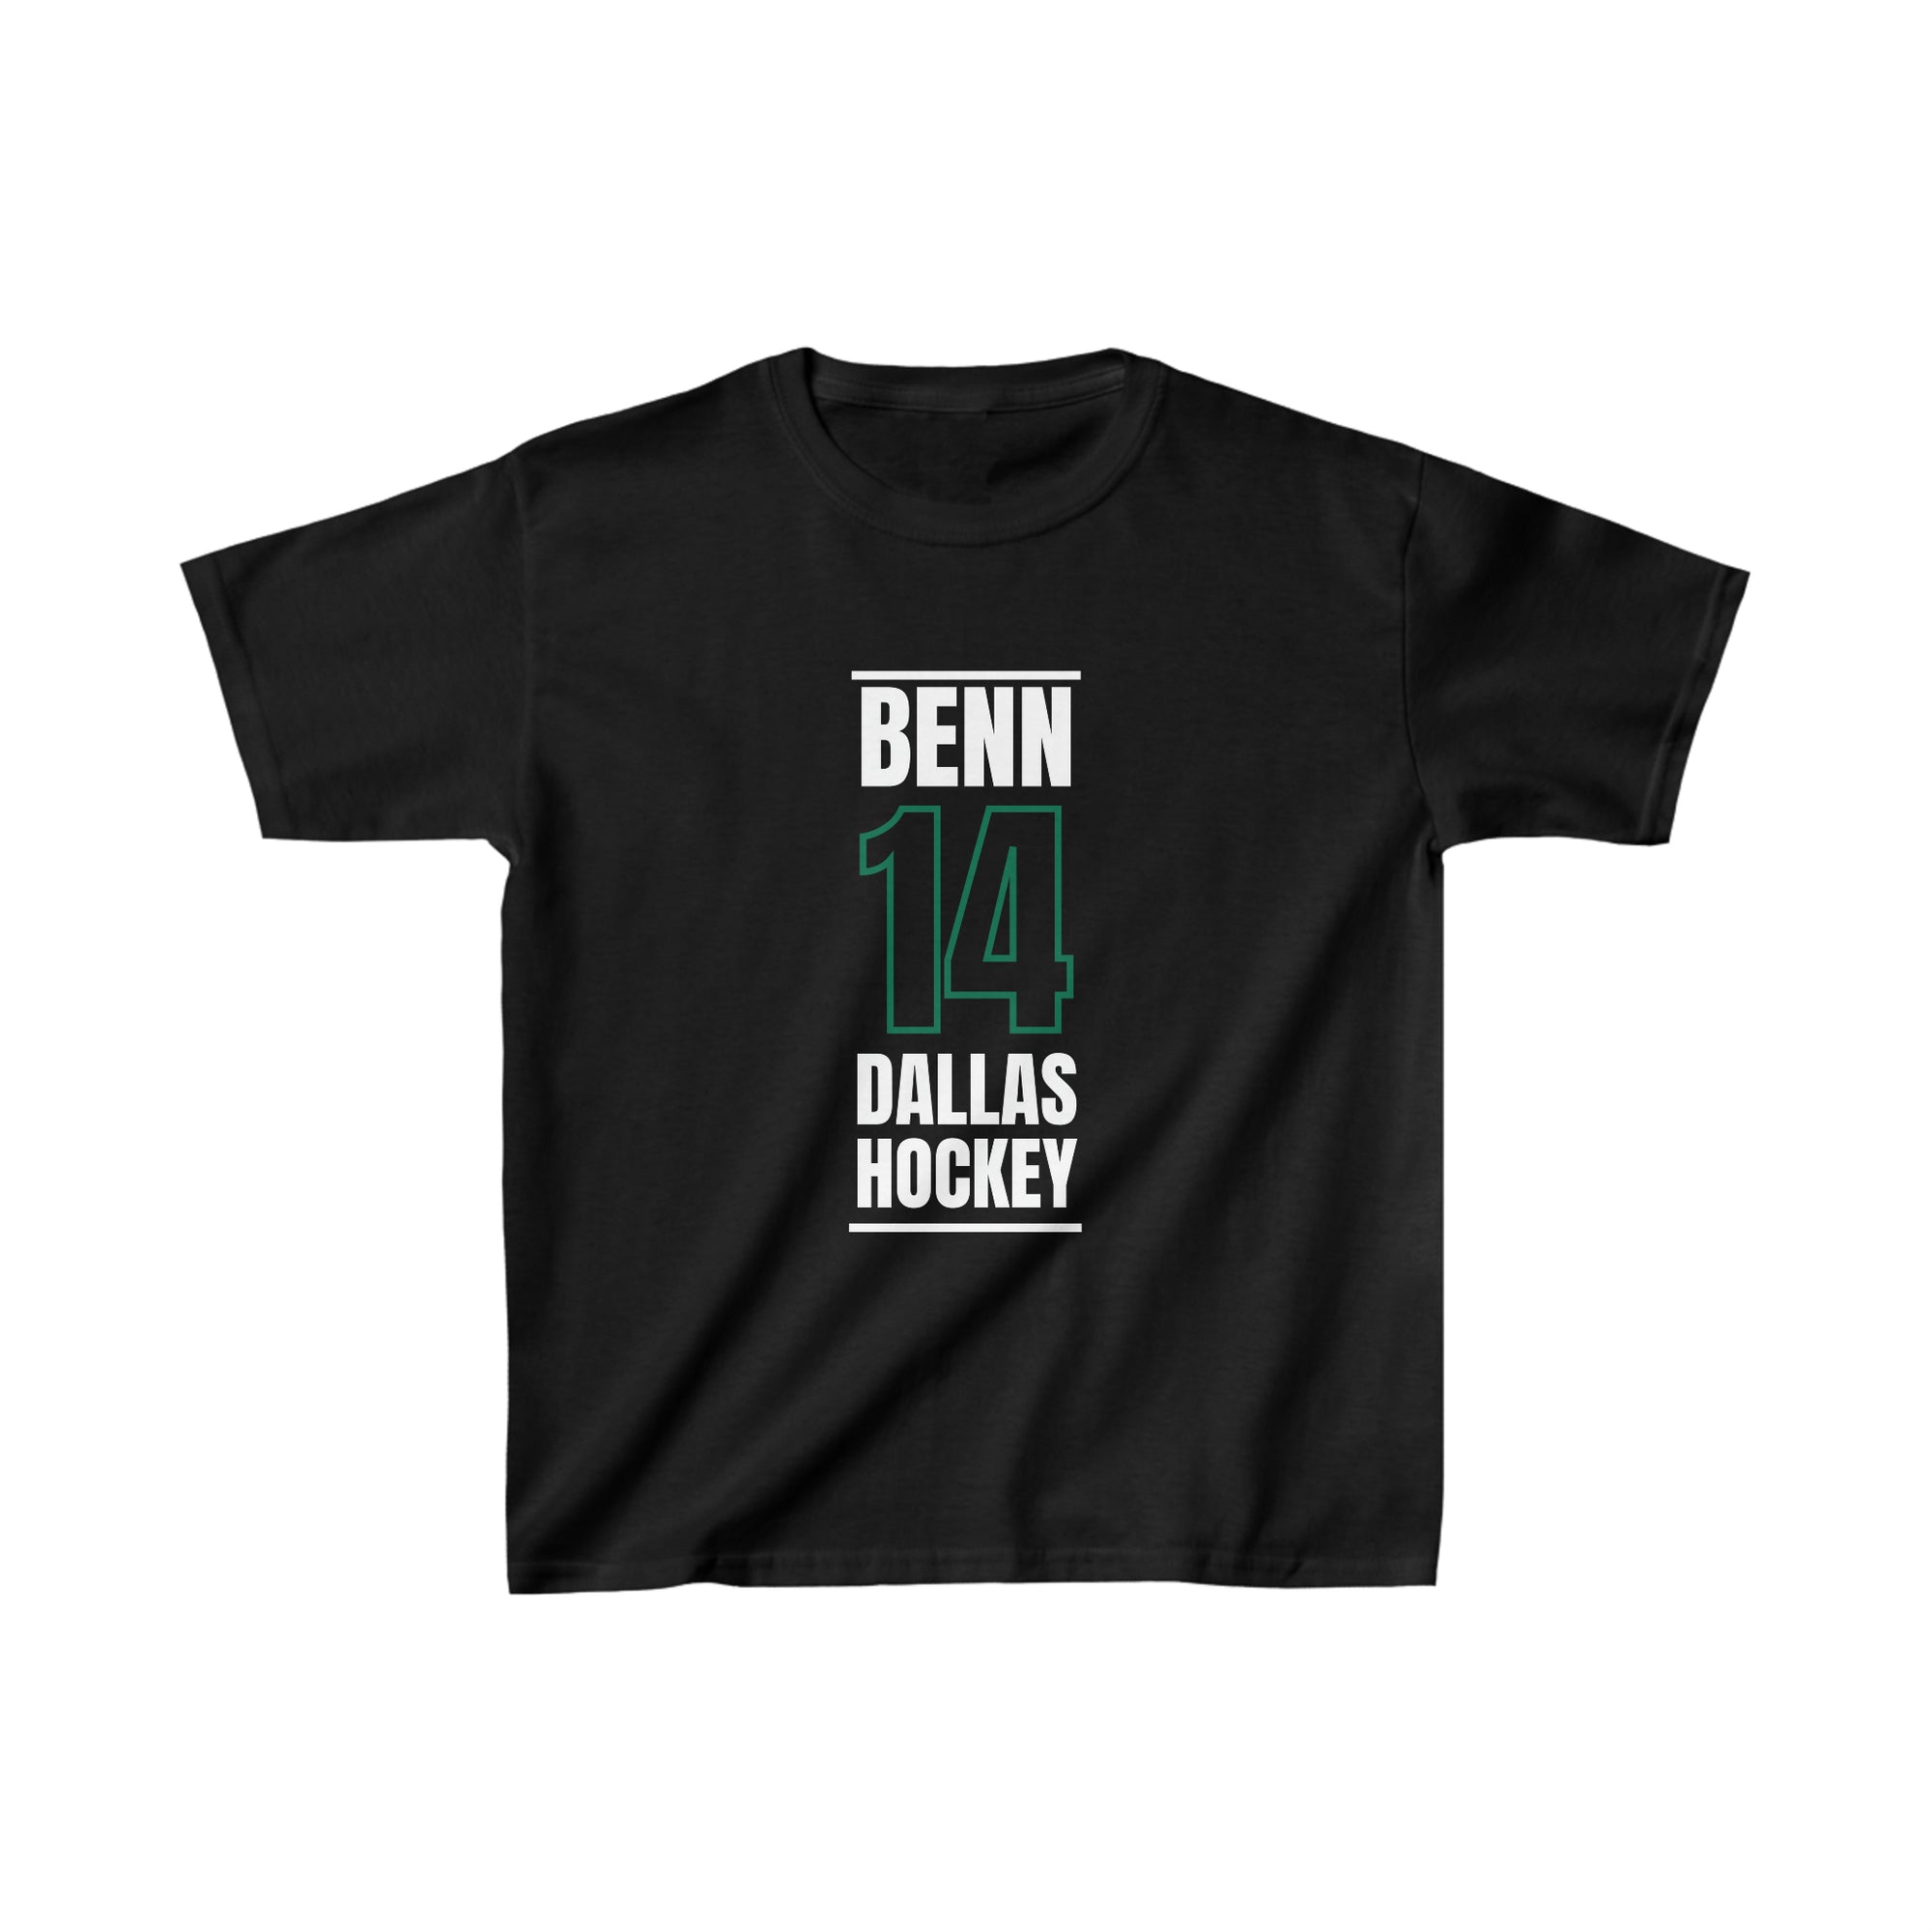 Benn 14 Dallas Hockey Black Vertical Design Kids Tee